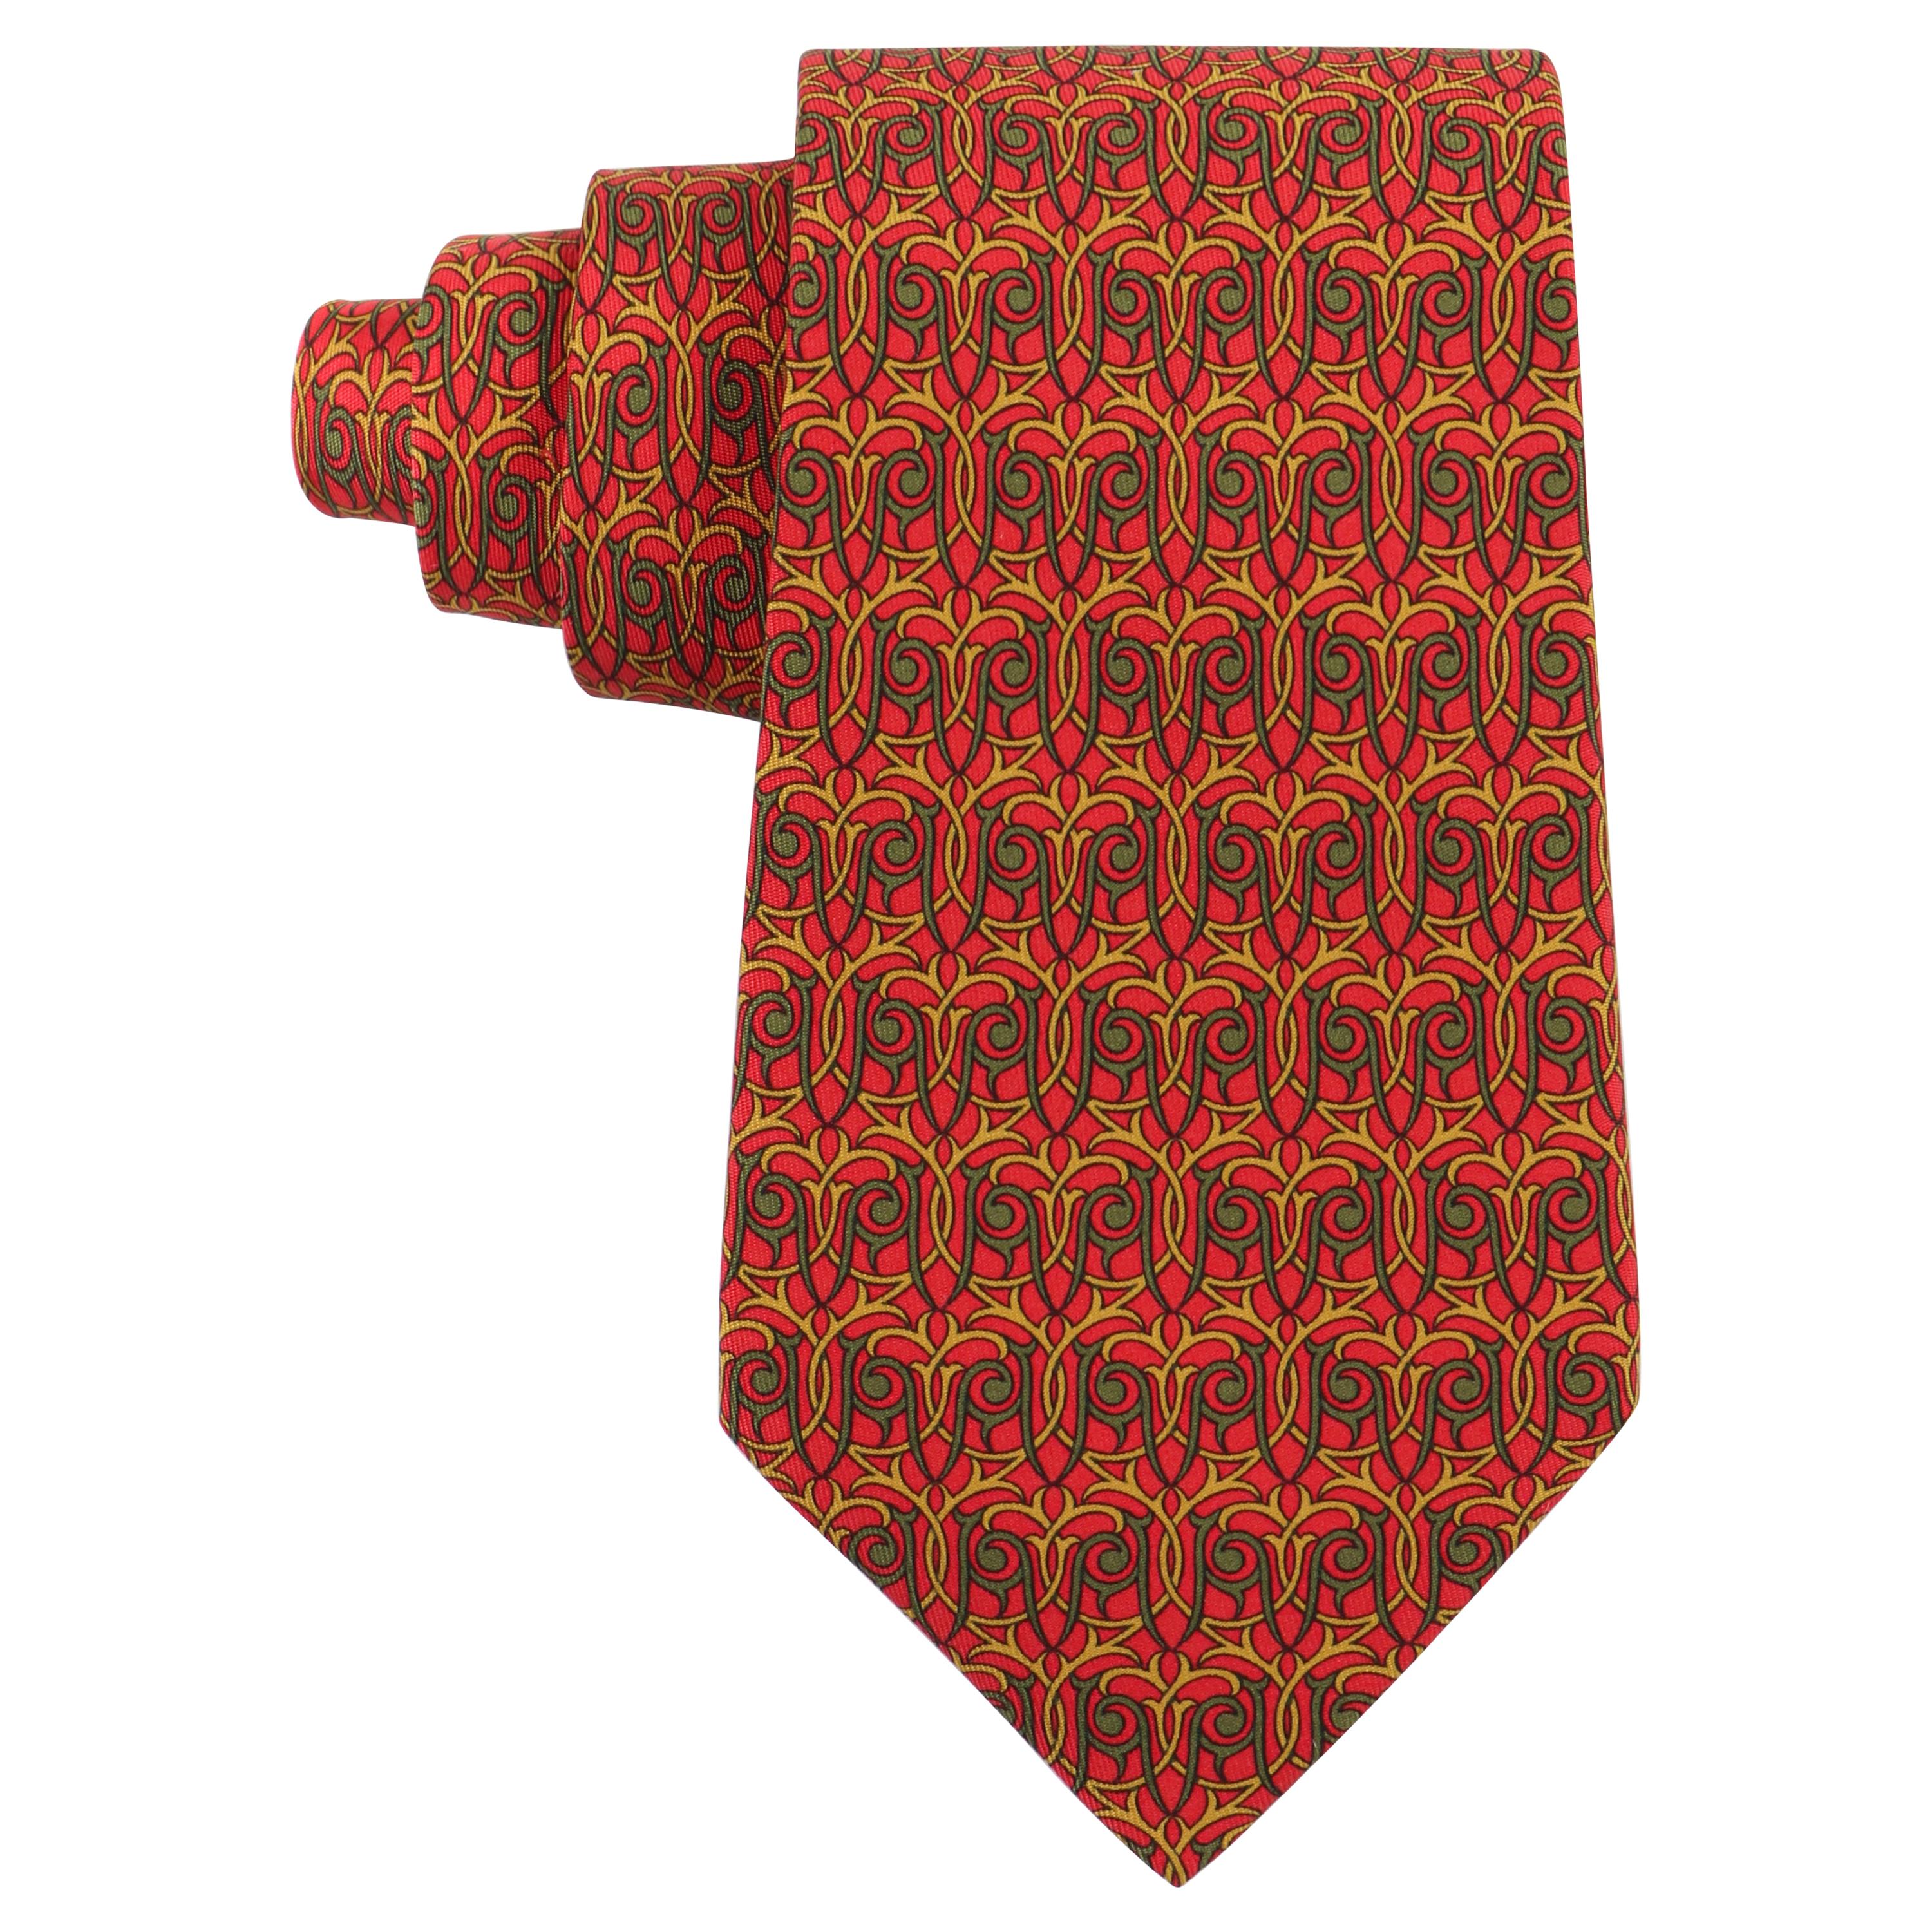 HERMES Men’s 7928 MA 5-Fold Red Green Yellow Intertwine Geometric Print Neck Tie